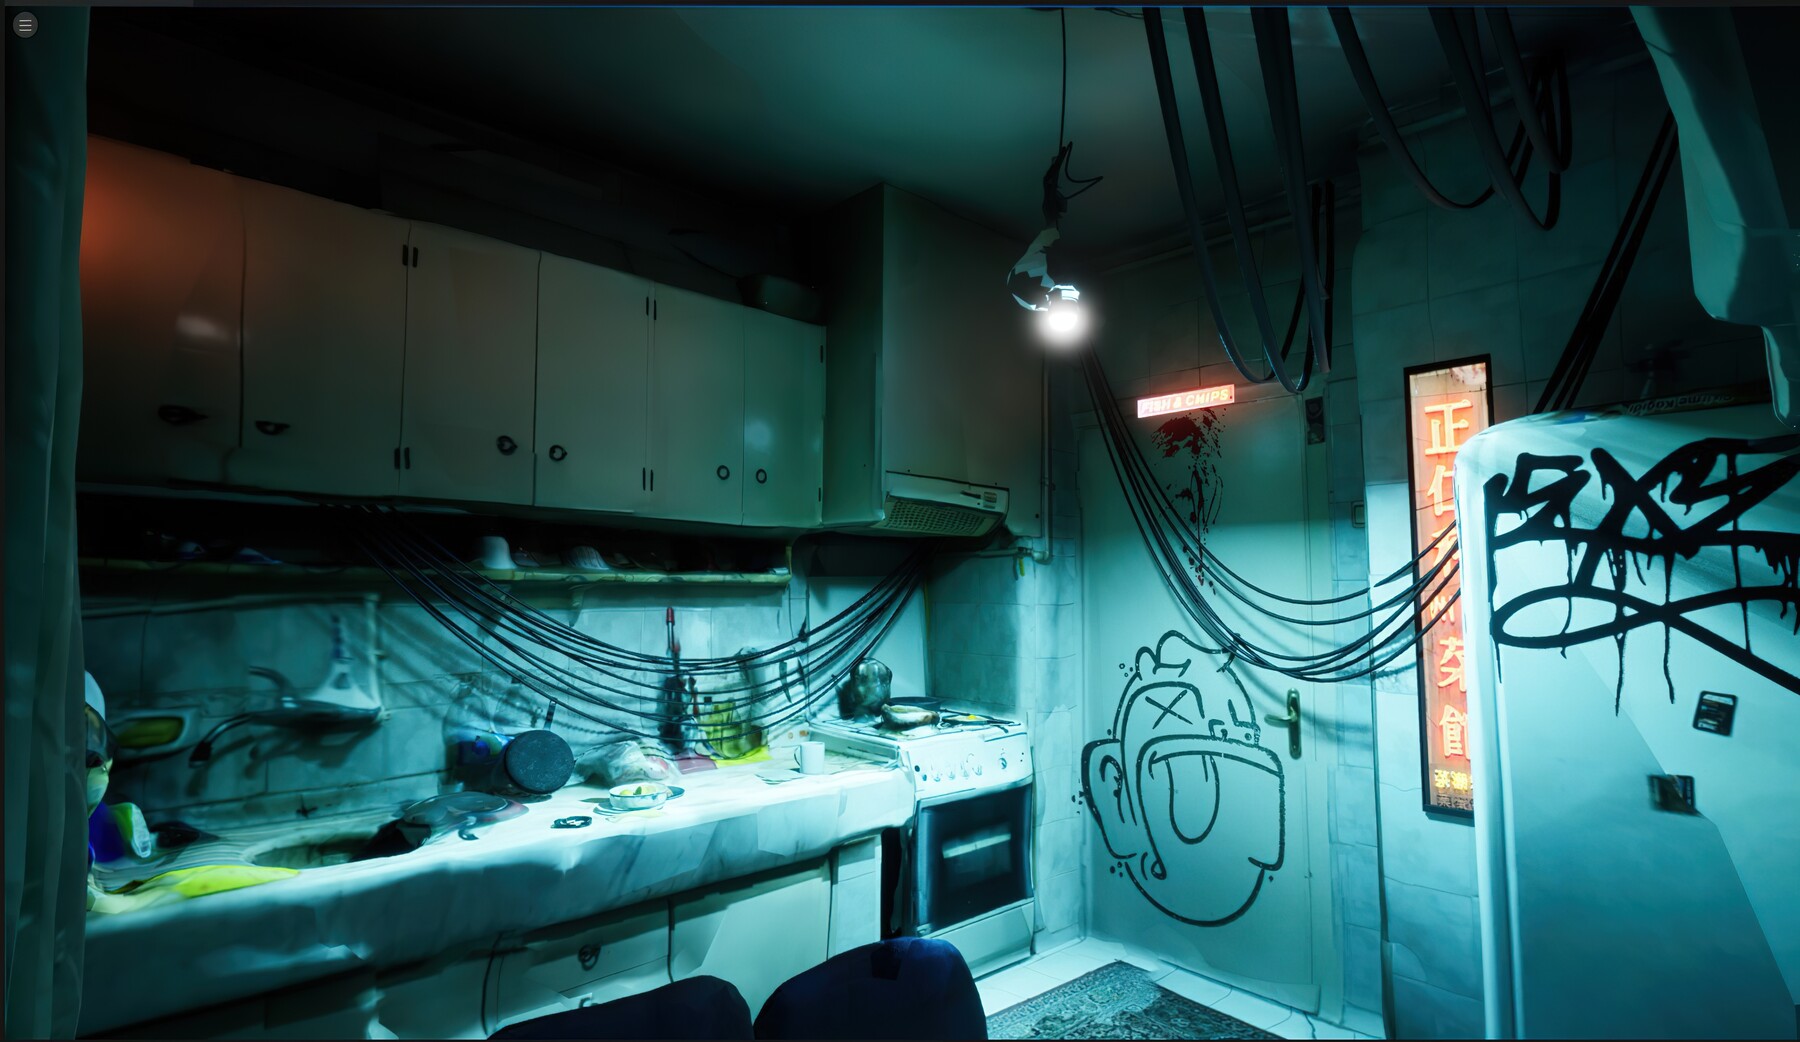 ArtStation - Gamer Room: Cyberpunk